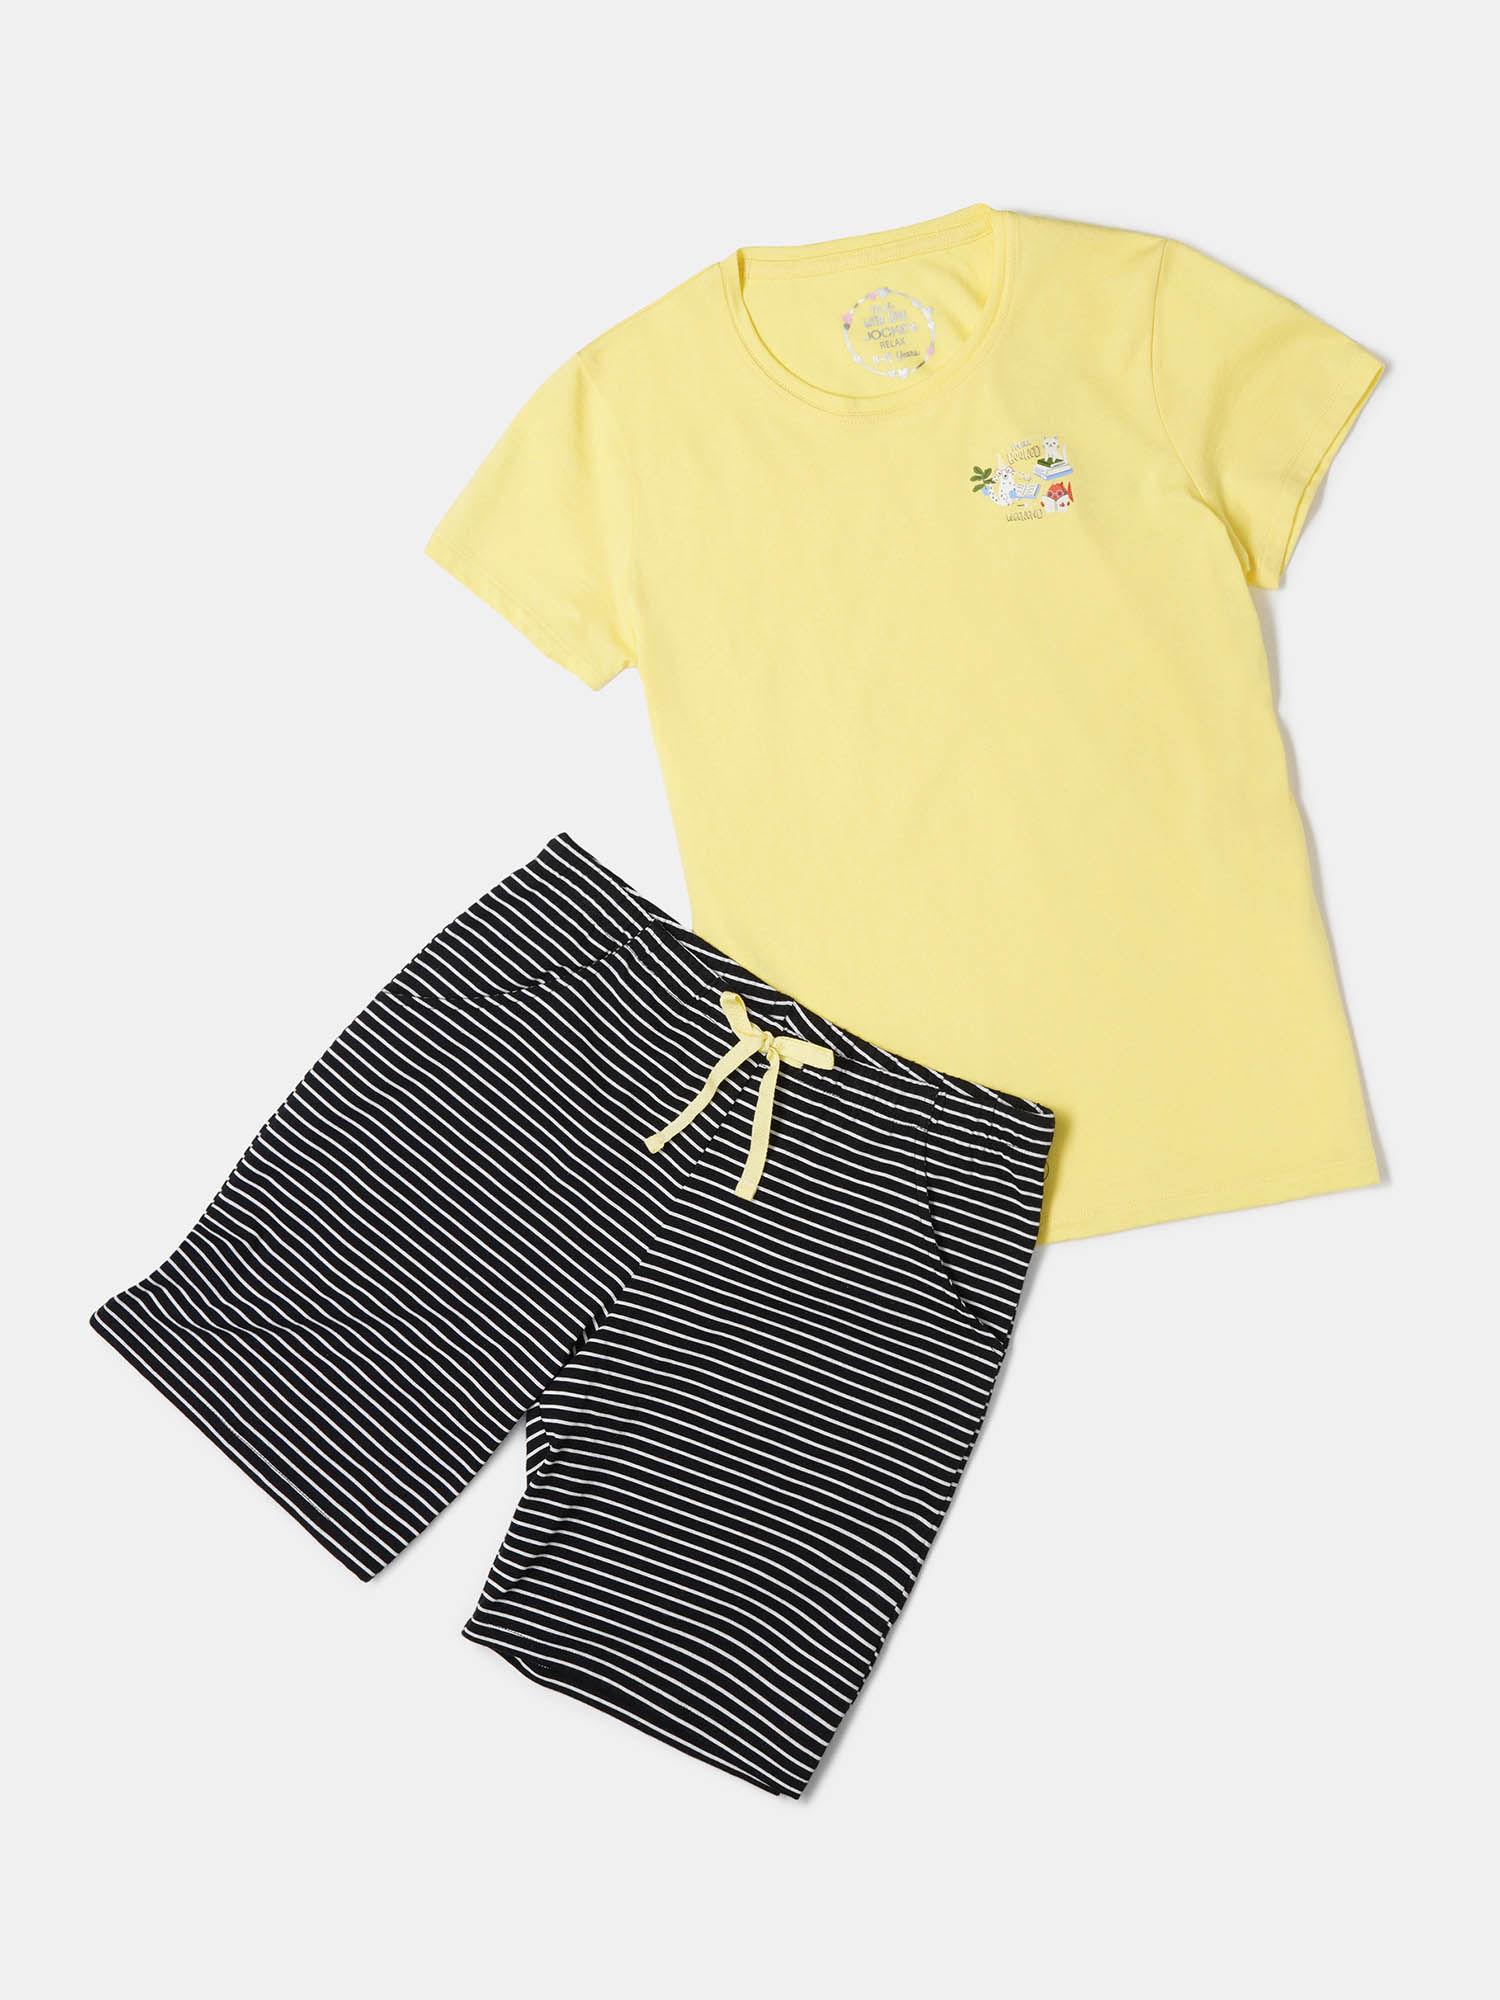 rg11 girl's cotton shorts & t-shirt yellow & black (set of 2)